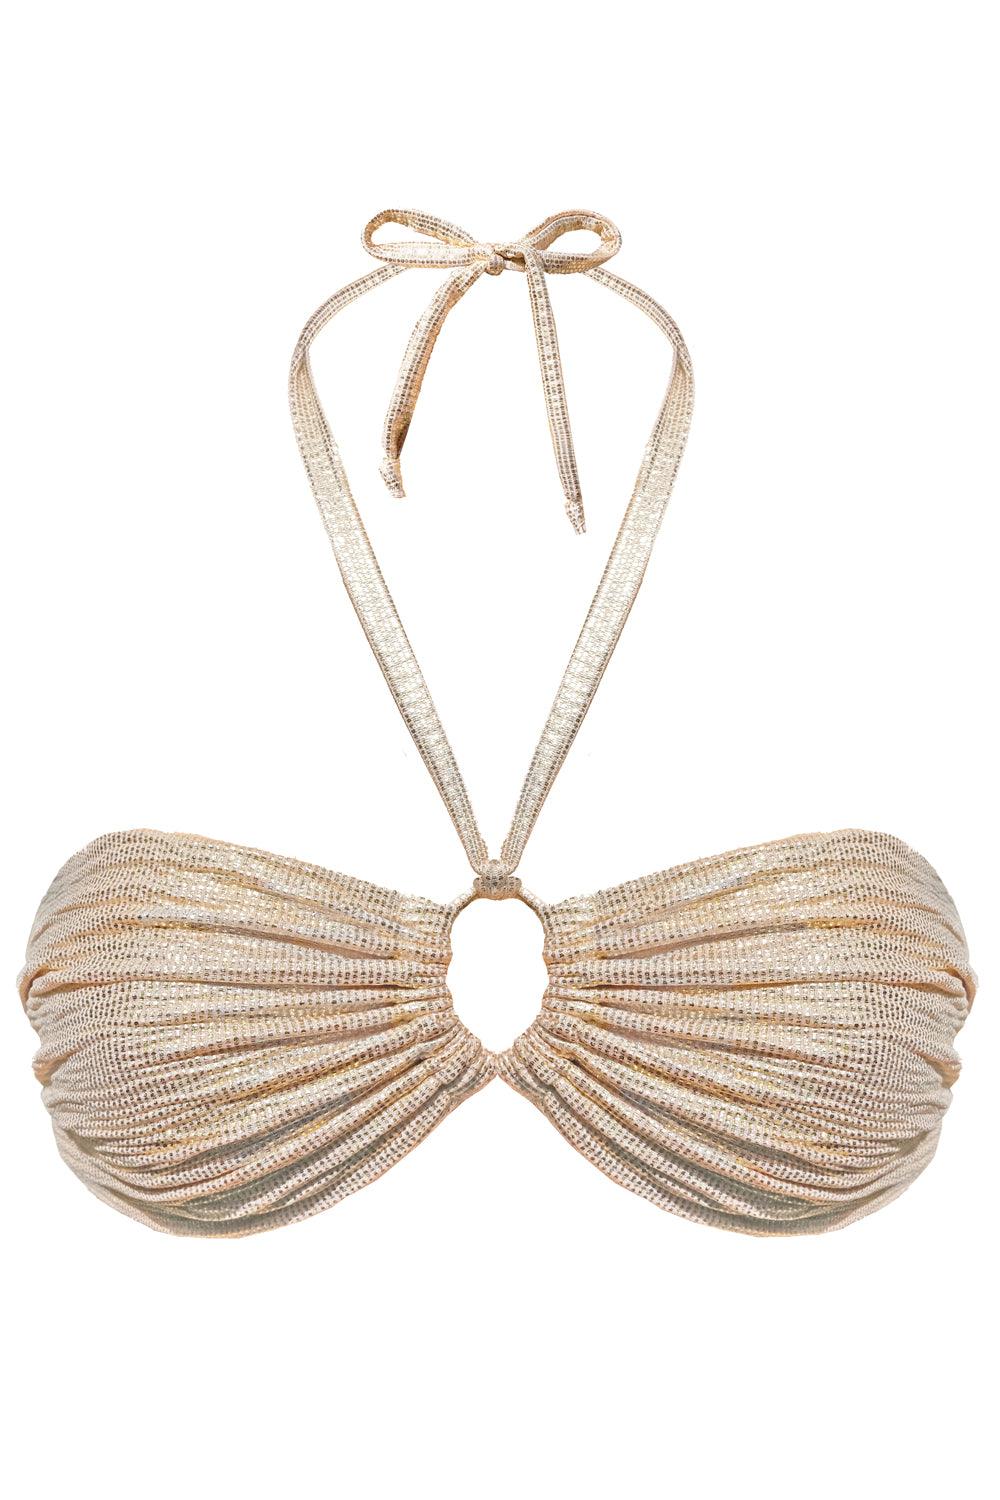 Cressida Gold bandeau - Bikini top by yesUndress. Shop on yesUndress